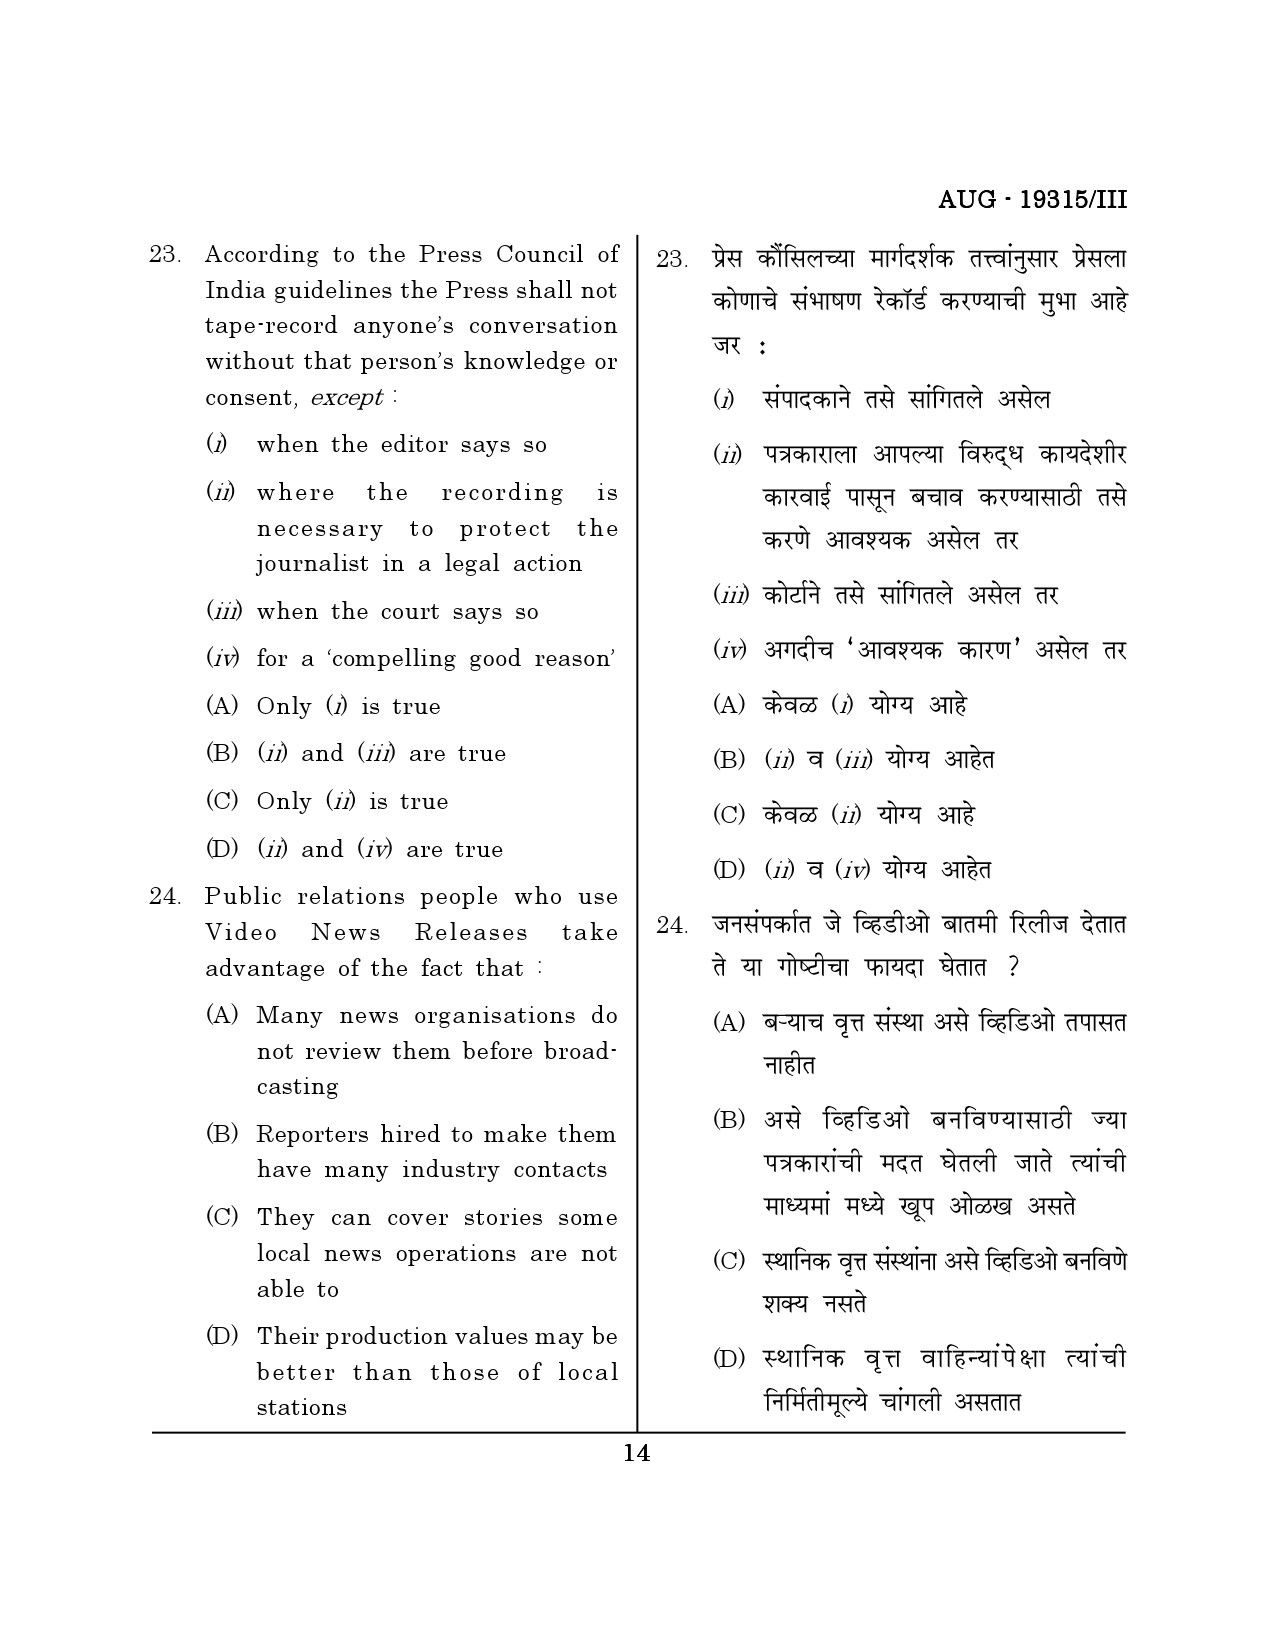 Maharashtra SET Journalism and Mass Communication Question Paper III August 2015 13